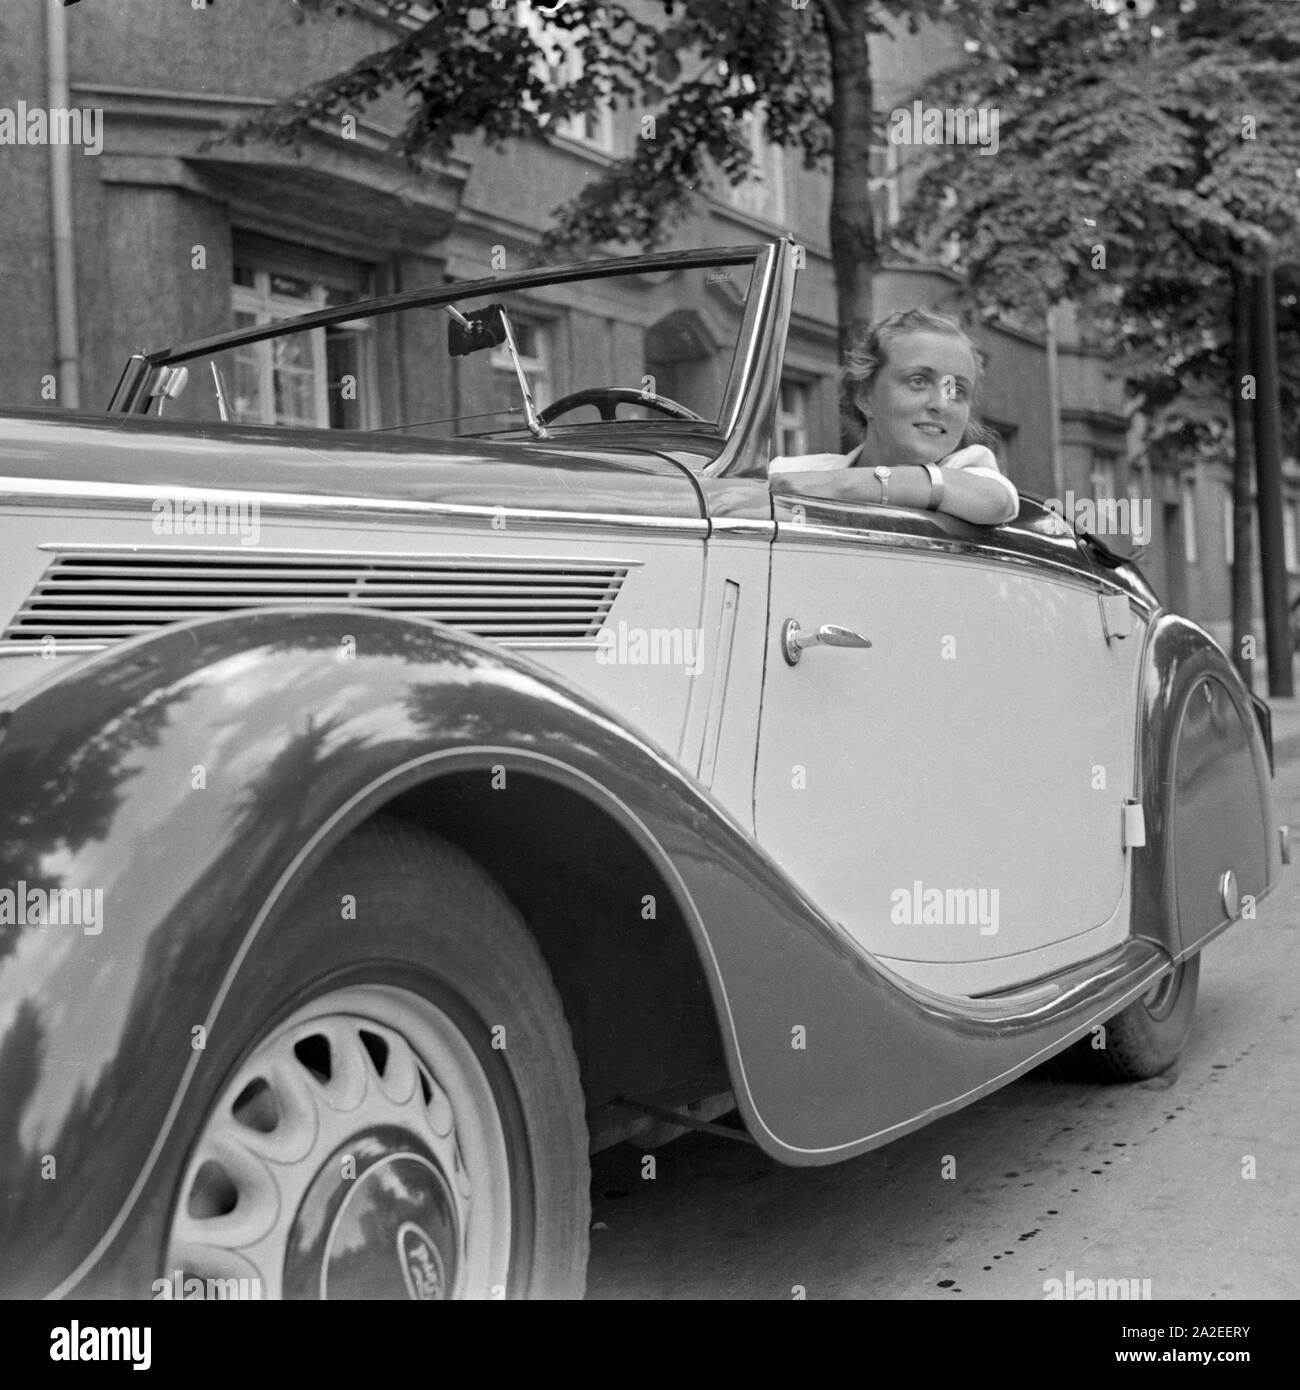 Für den Werbefoto Personenkraftwagen Ford mit einer jungen Frau Eifel am Steuer, Deutschland 1935. Photo commerciale pour le passager car Ford Eifel avec une jeune femme, Allemagne 1935. Banque D'Images